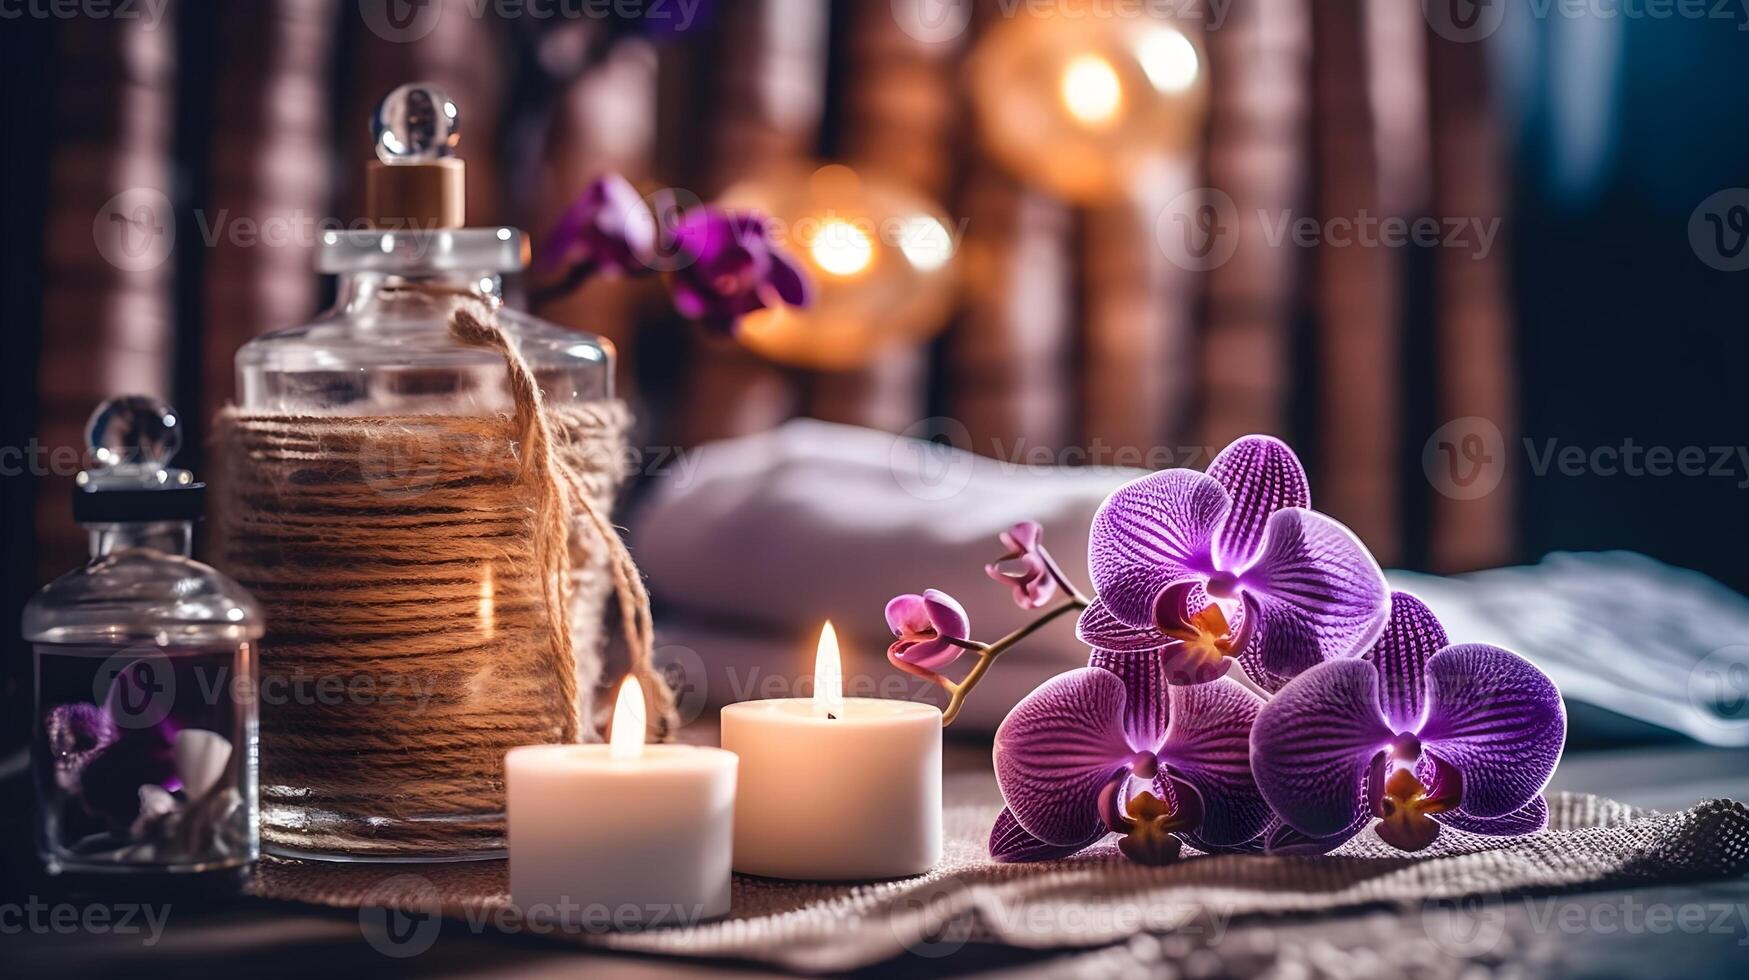 ai gegenereerd spa instelling met kaarsen en orchidee bloemen foto